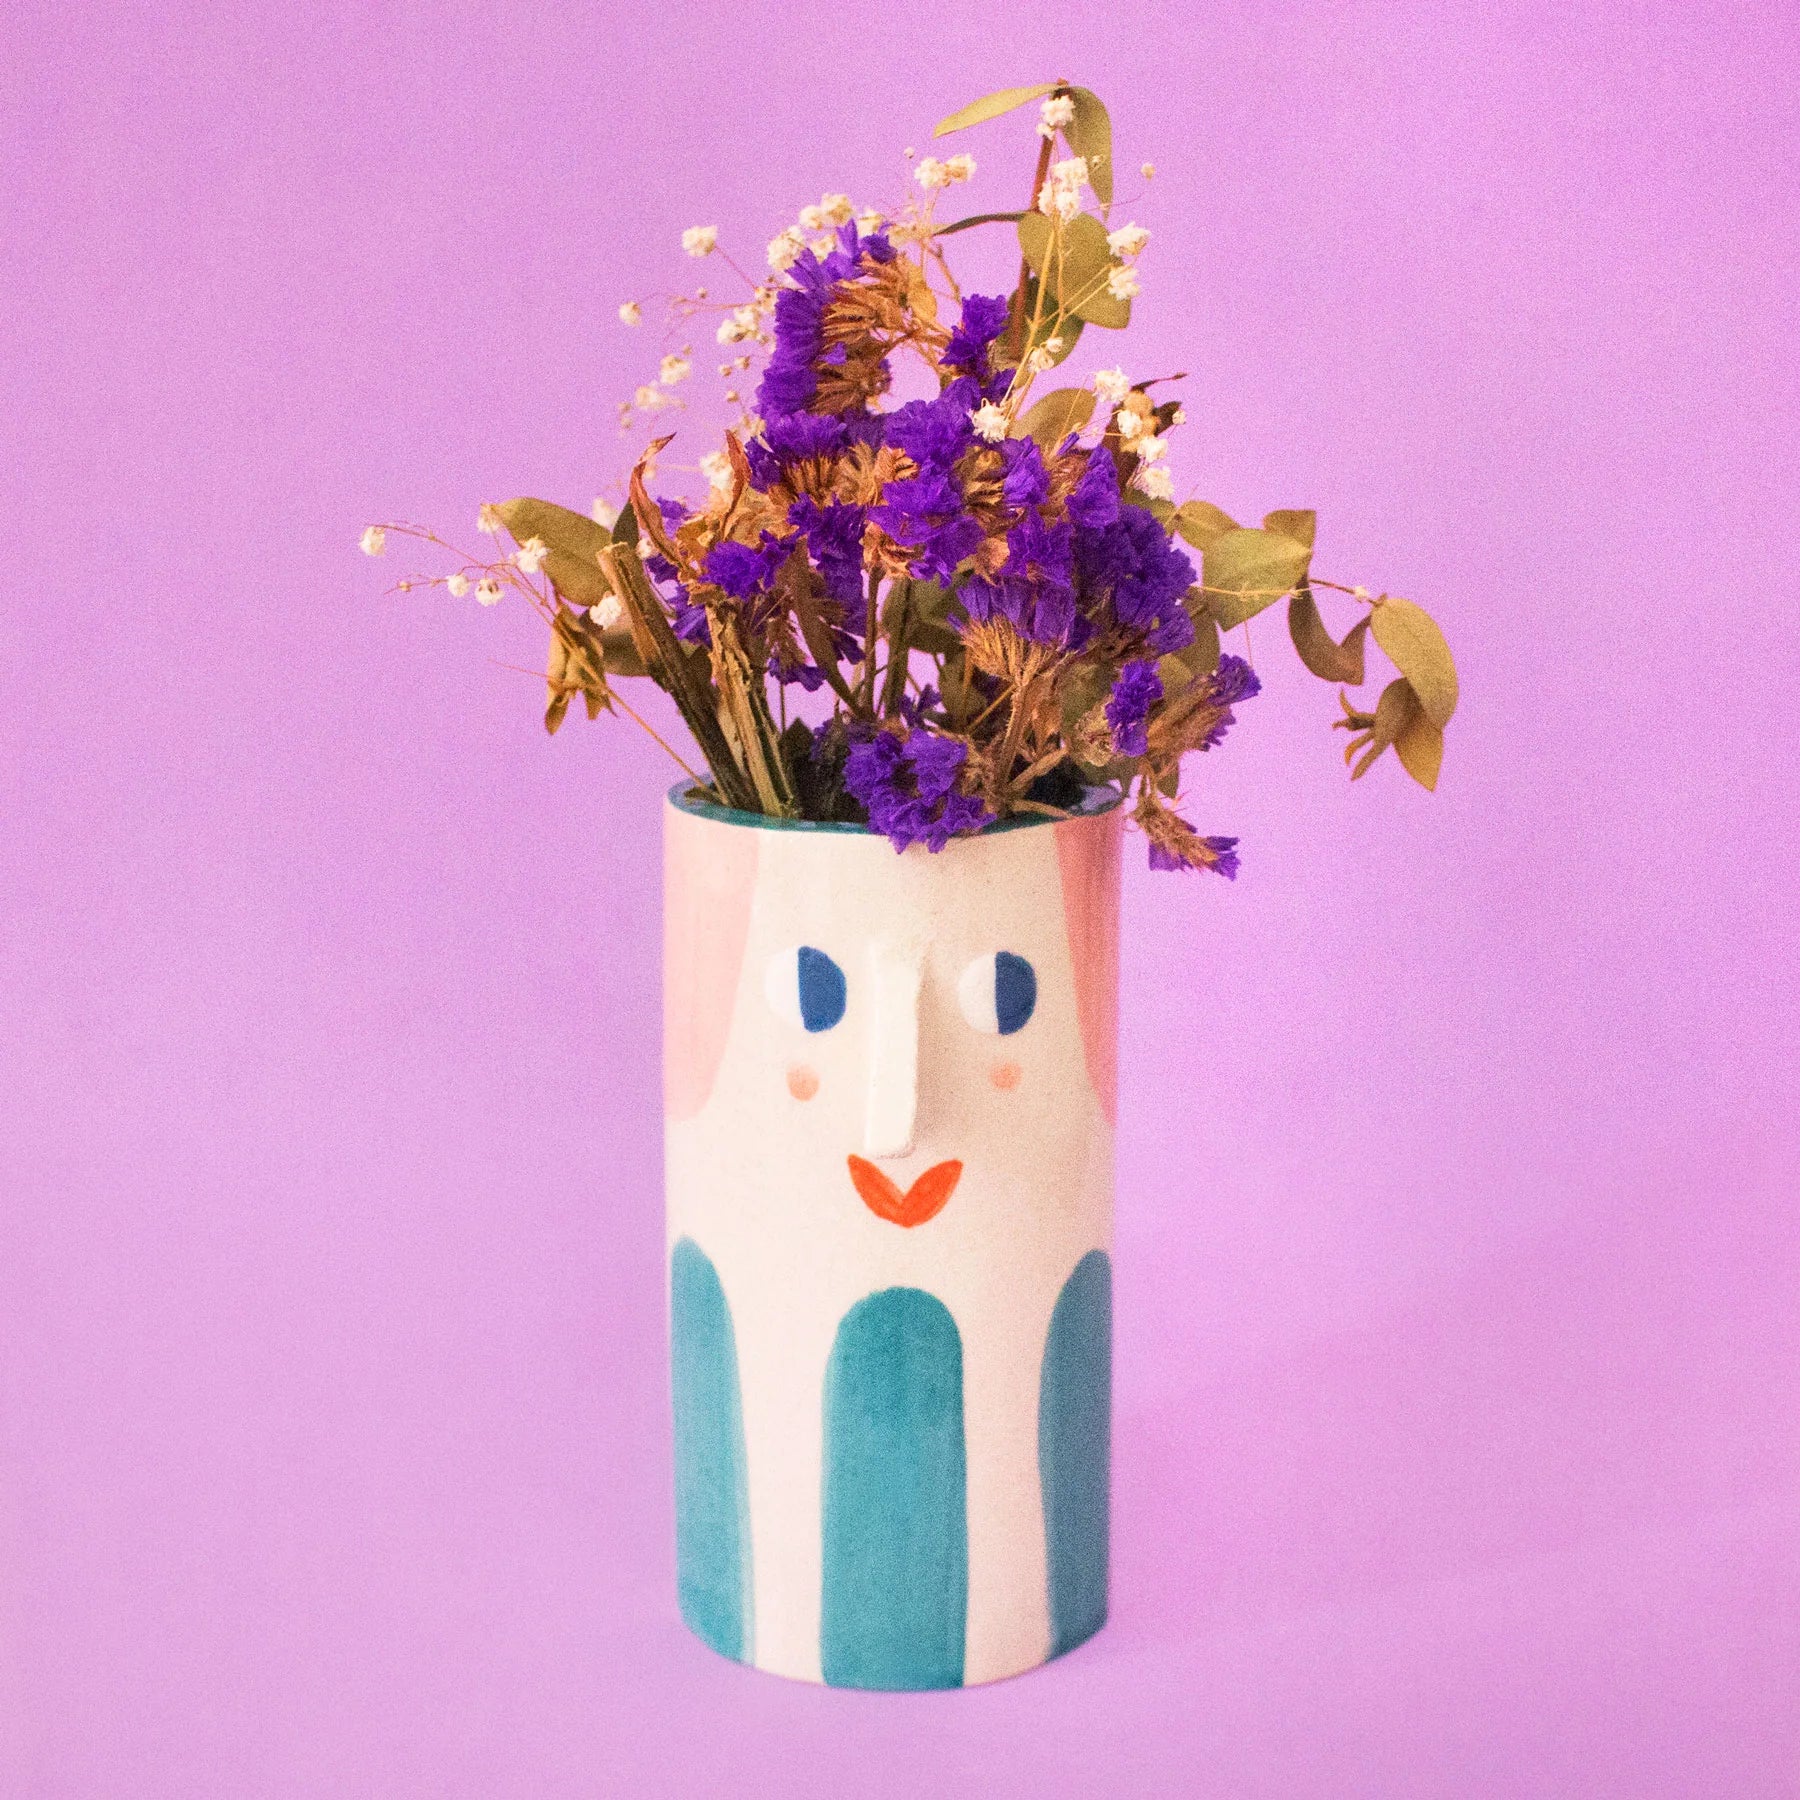 Girl with Teal Stripes / Ceramic Vase